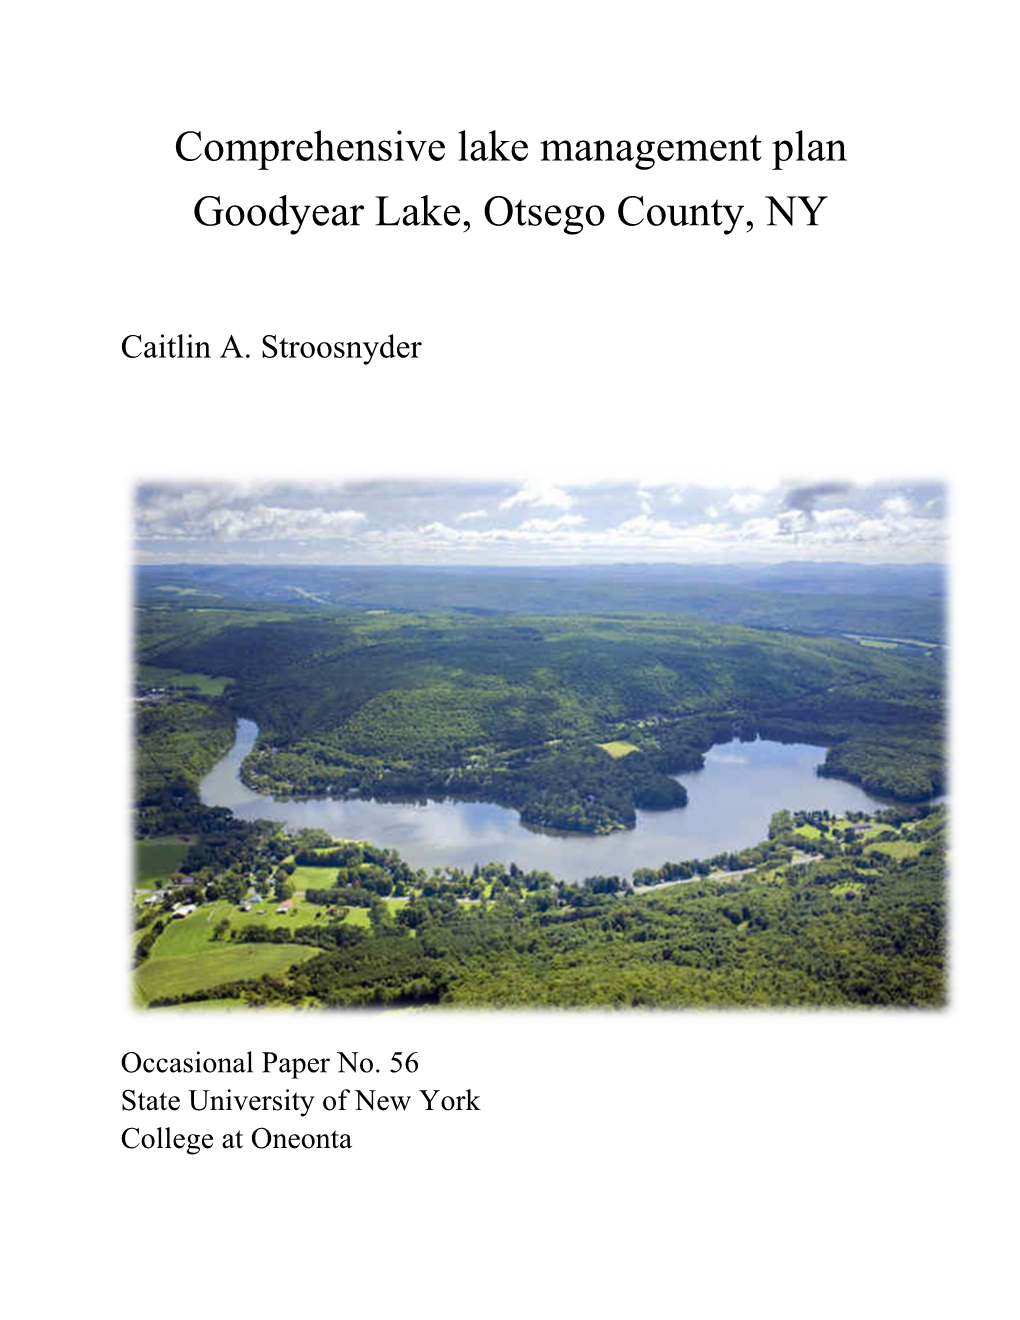 Comprehensive Lake Management Plan Goodyear Lake, Otsego County, NY